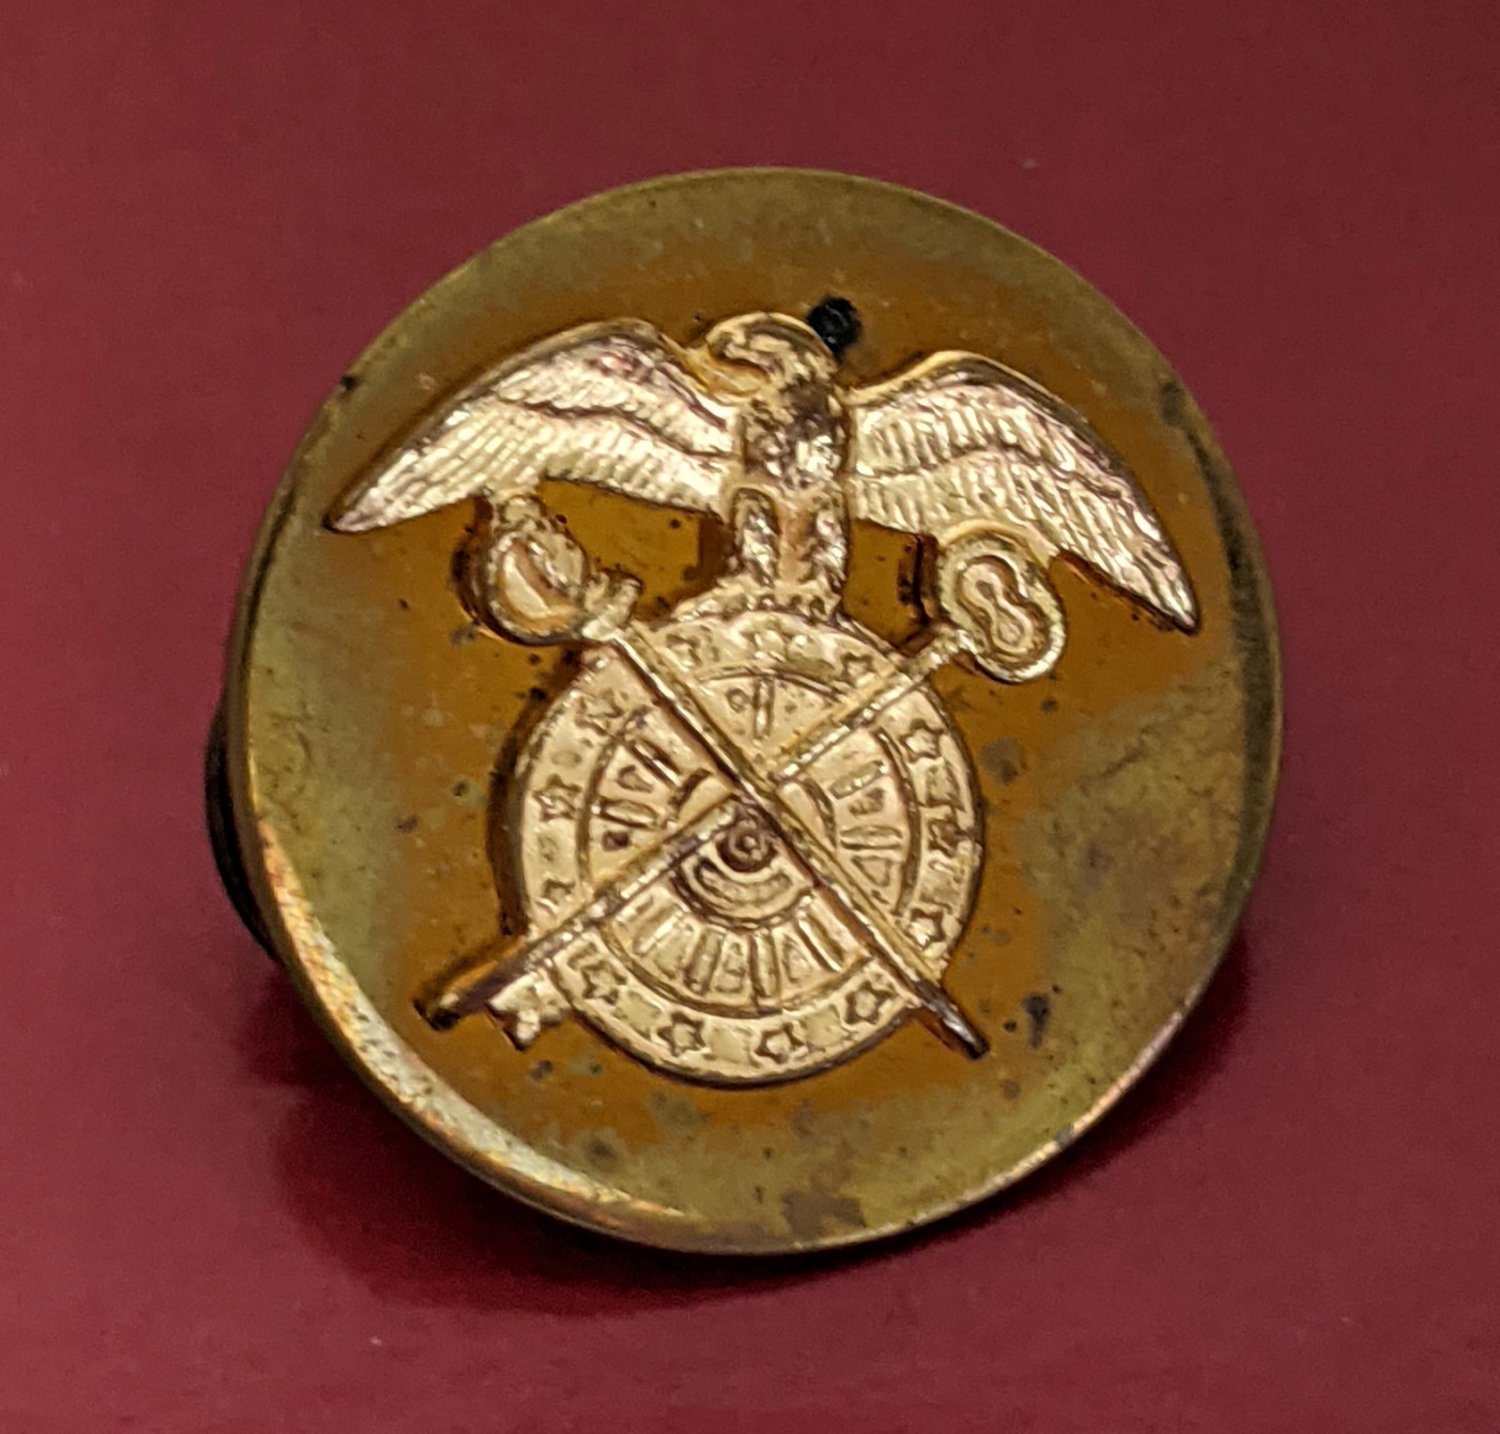 Vintage US Army Quartermaster Eagle Sword Key Lapel, Hat or Collar Pin Award